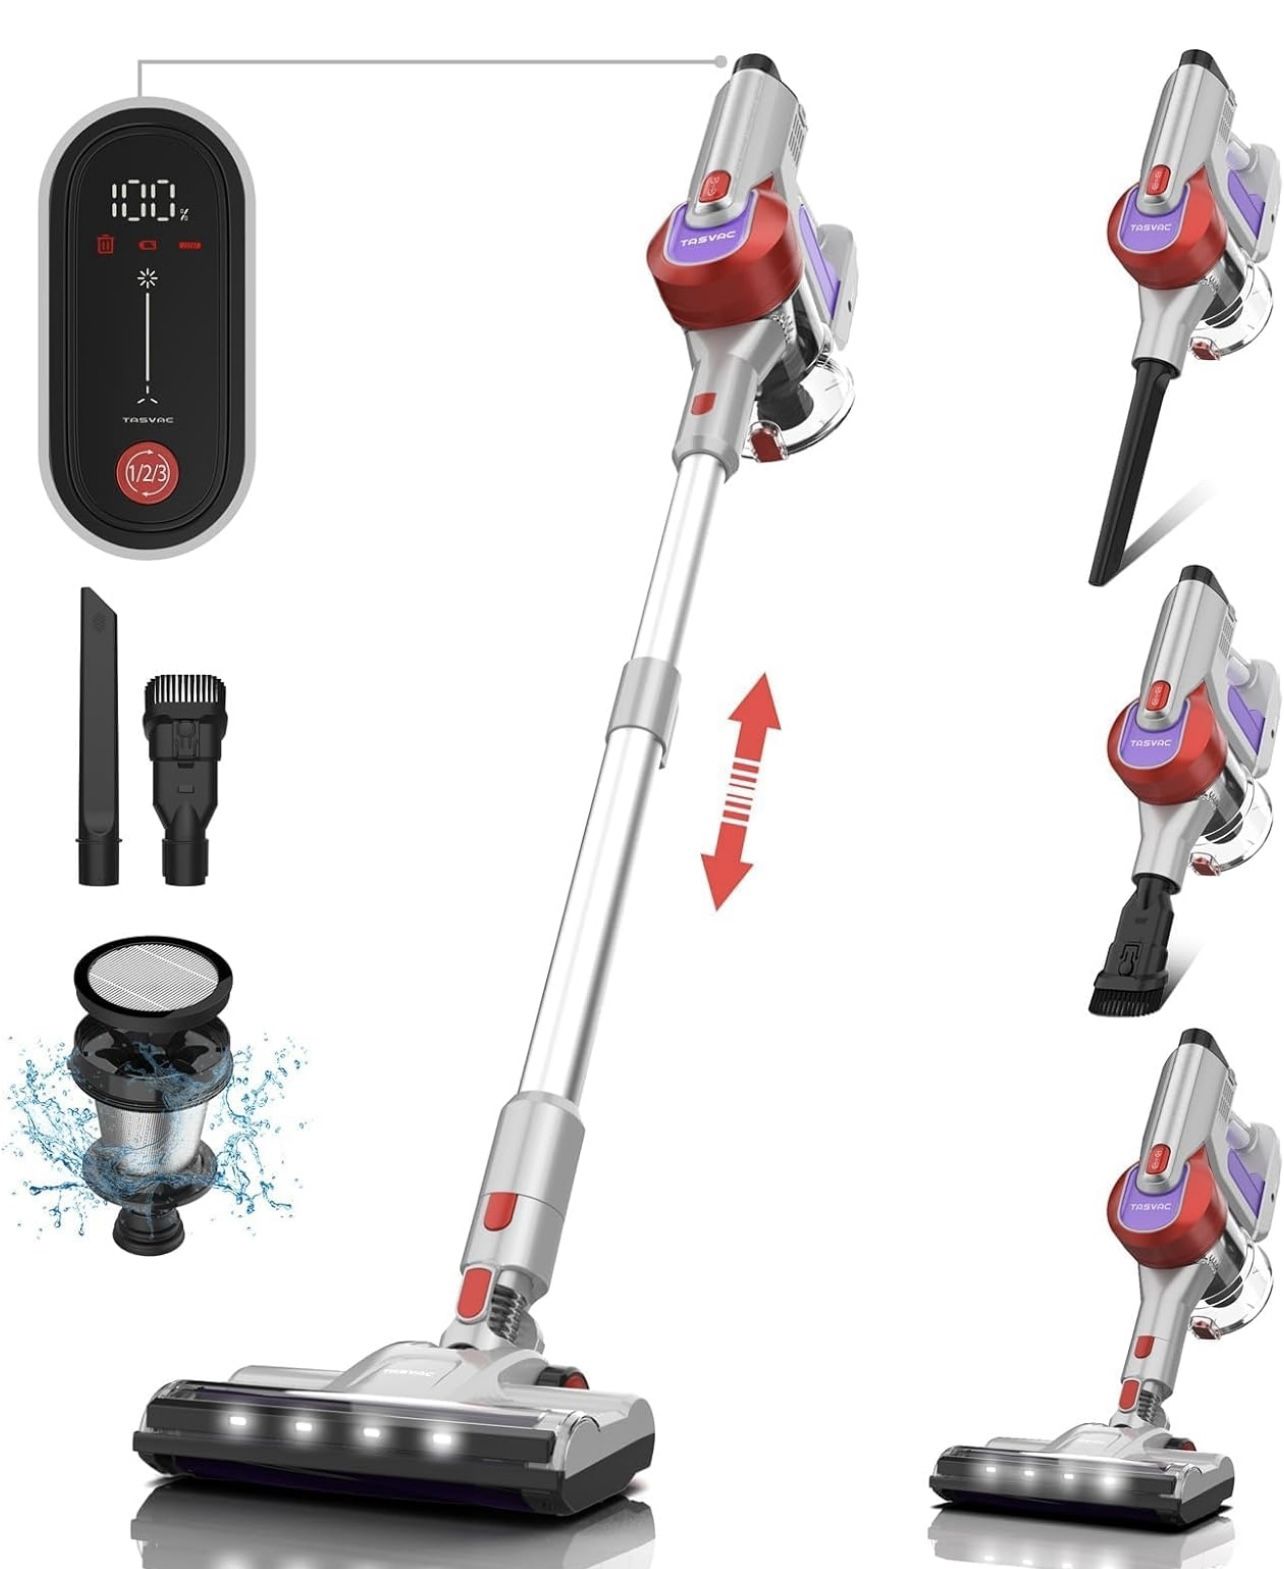 28Kpa 300W Stick Vacuum Cleaner, 50min Runtime, Hard Floor Carpet Pet Hair, Red (have 2) 